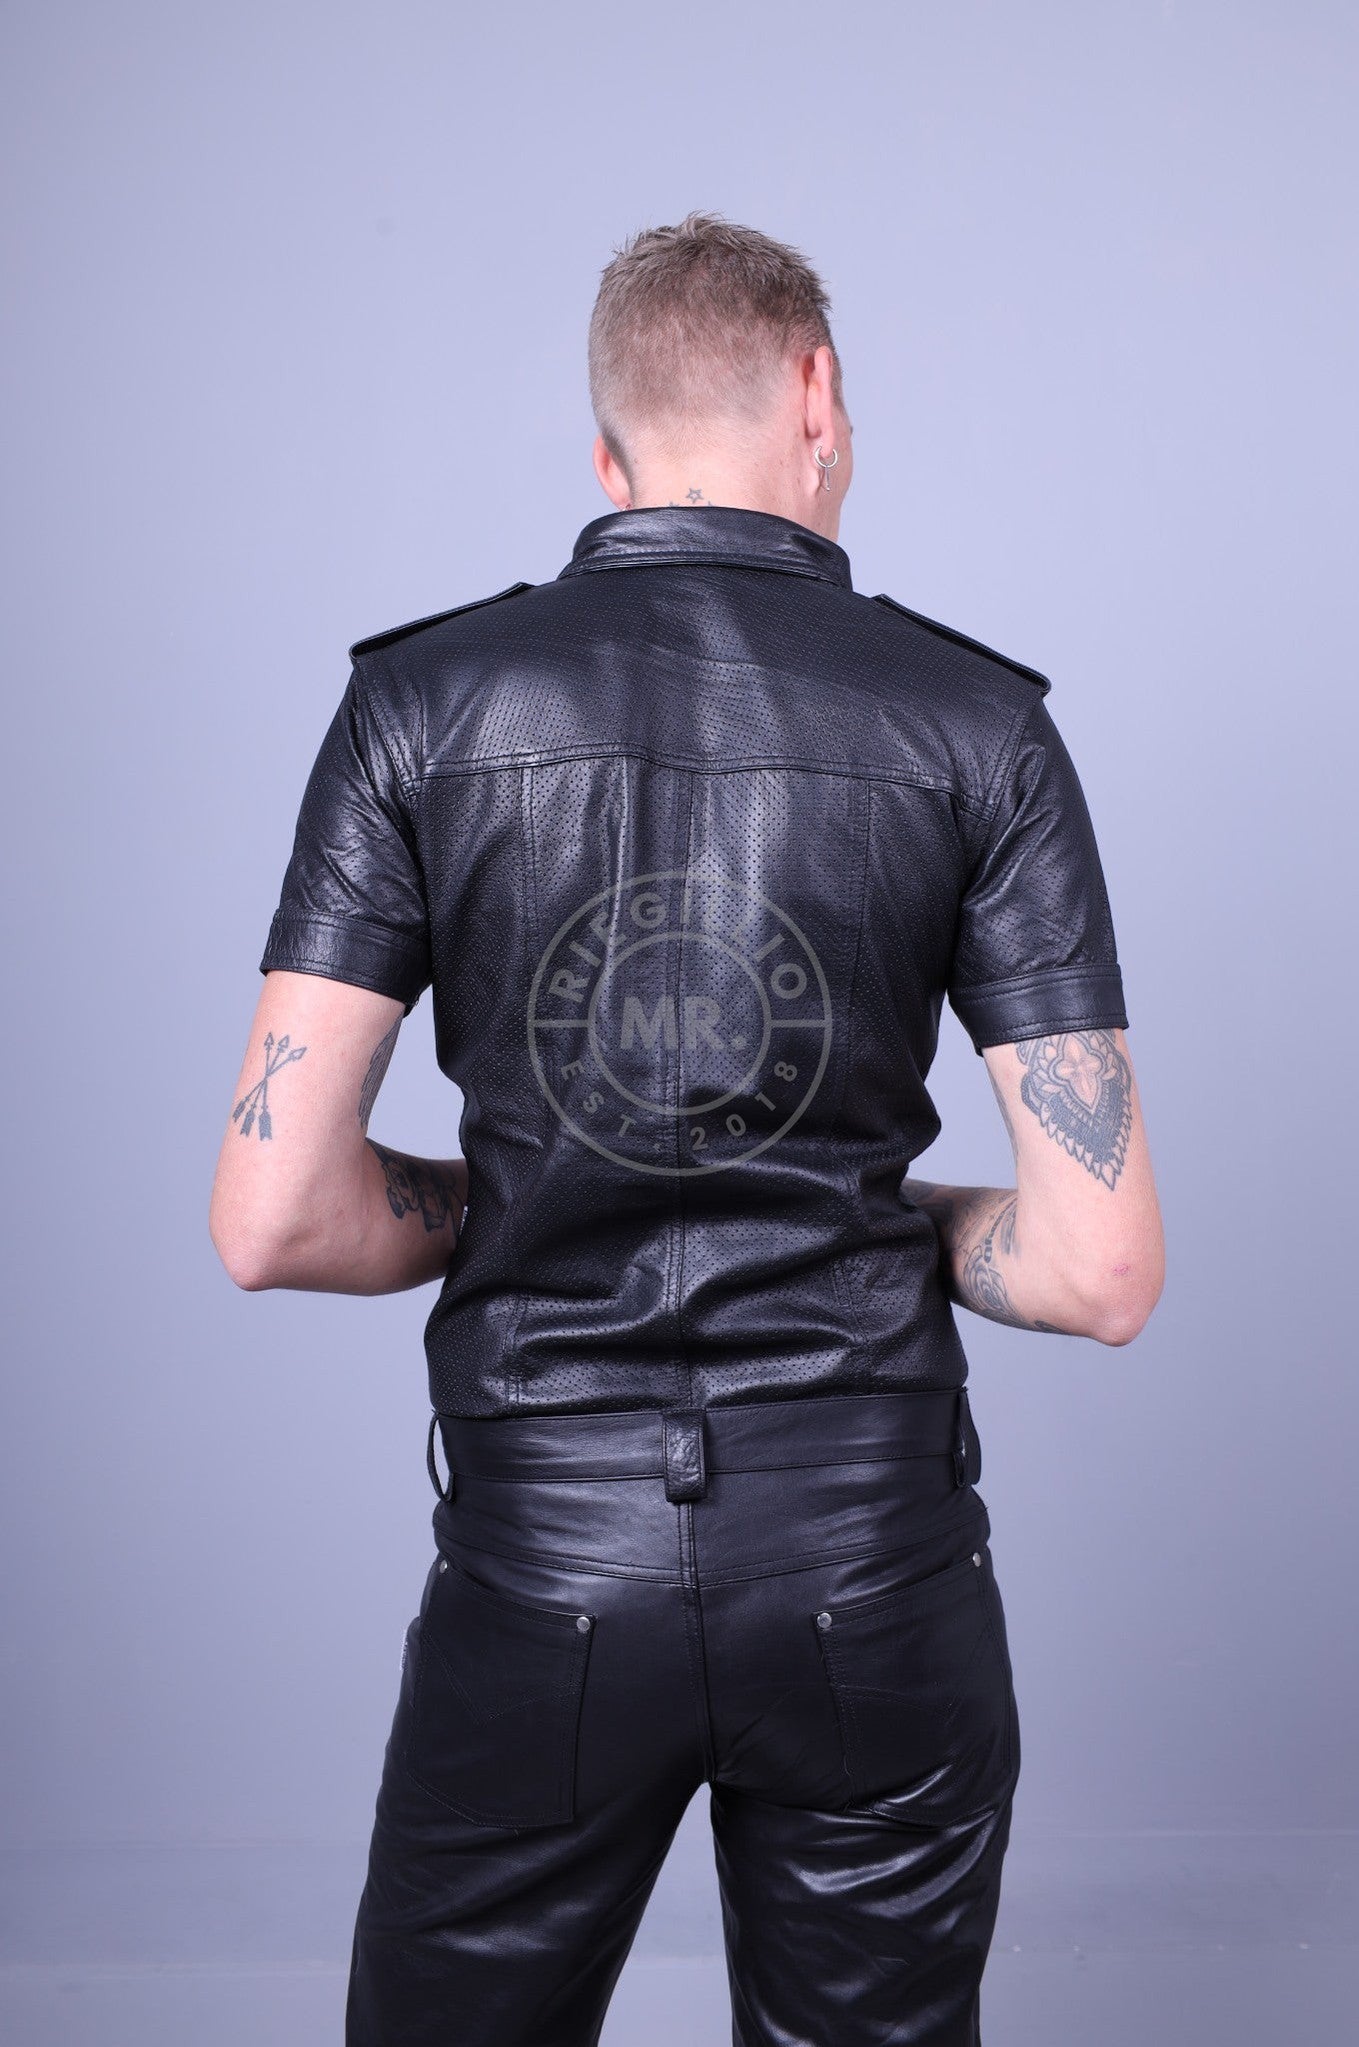 Black Leather Perforated Shirt-at MR. Riegillio